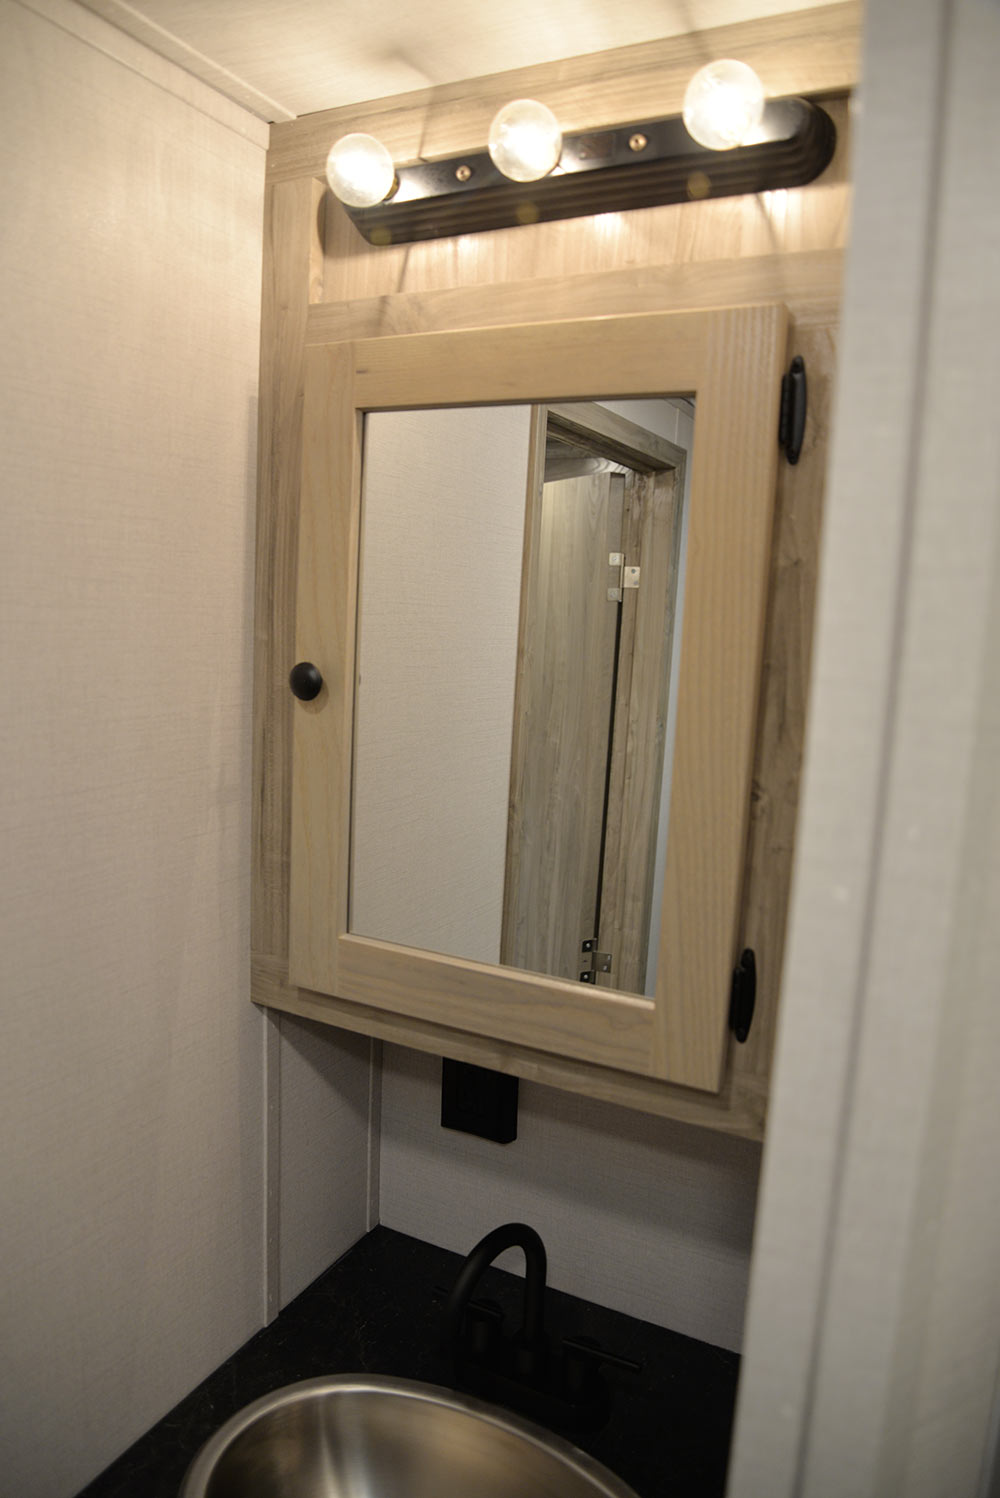 Bathroom Mirror in PX9SRK Patriot Edition Horse Trailer | SMC Trailers